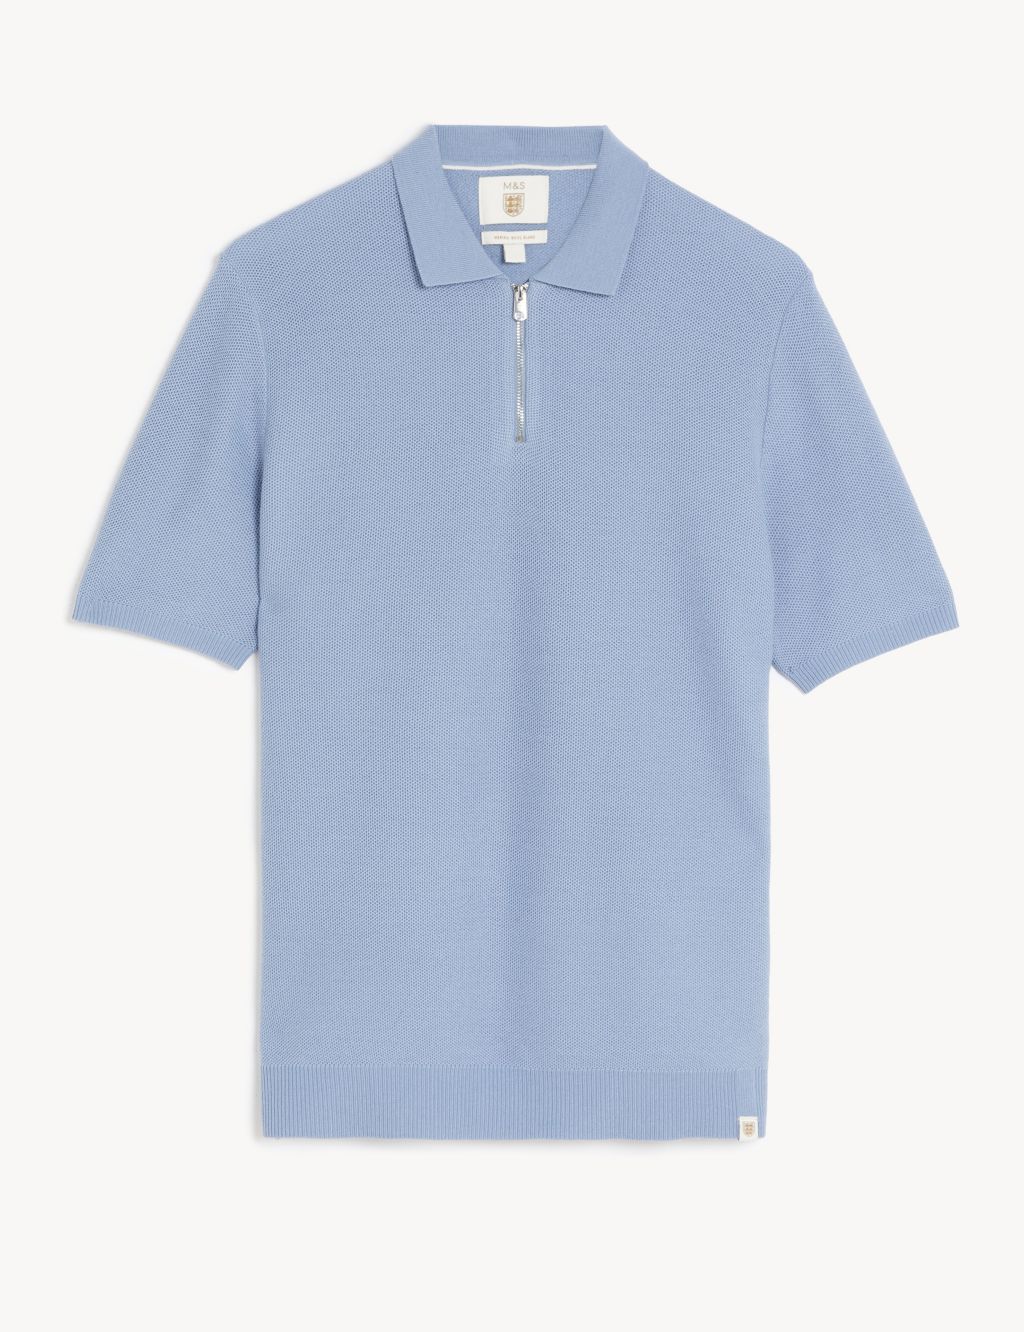 Merino Wool Blend Zip Neck Polo Shirt image 2